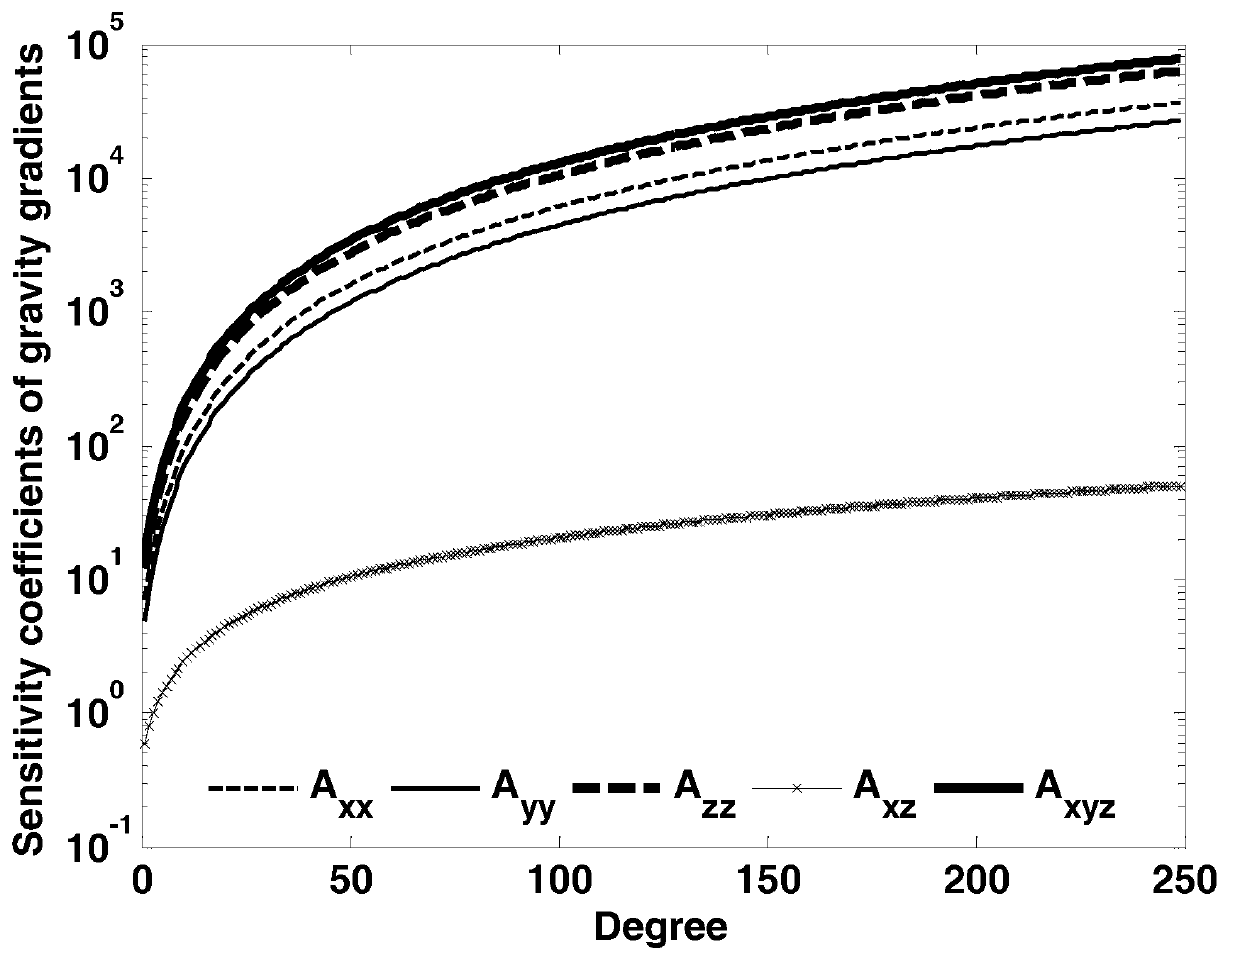 Satellite gravity gradient inversion method based on power spectrum half analysis